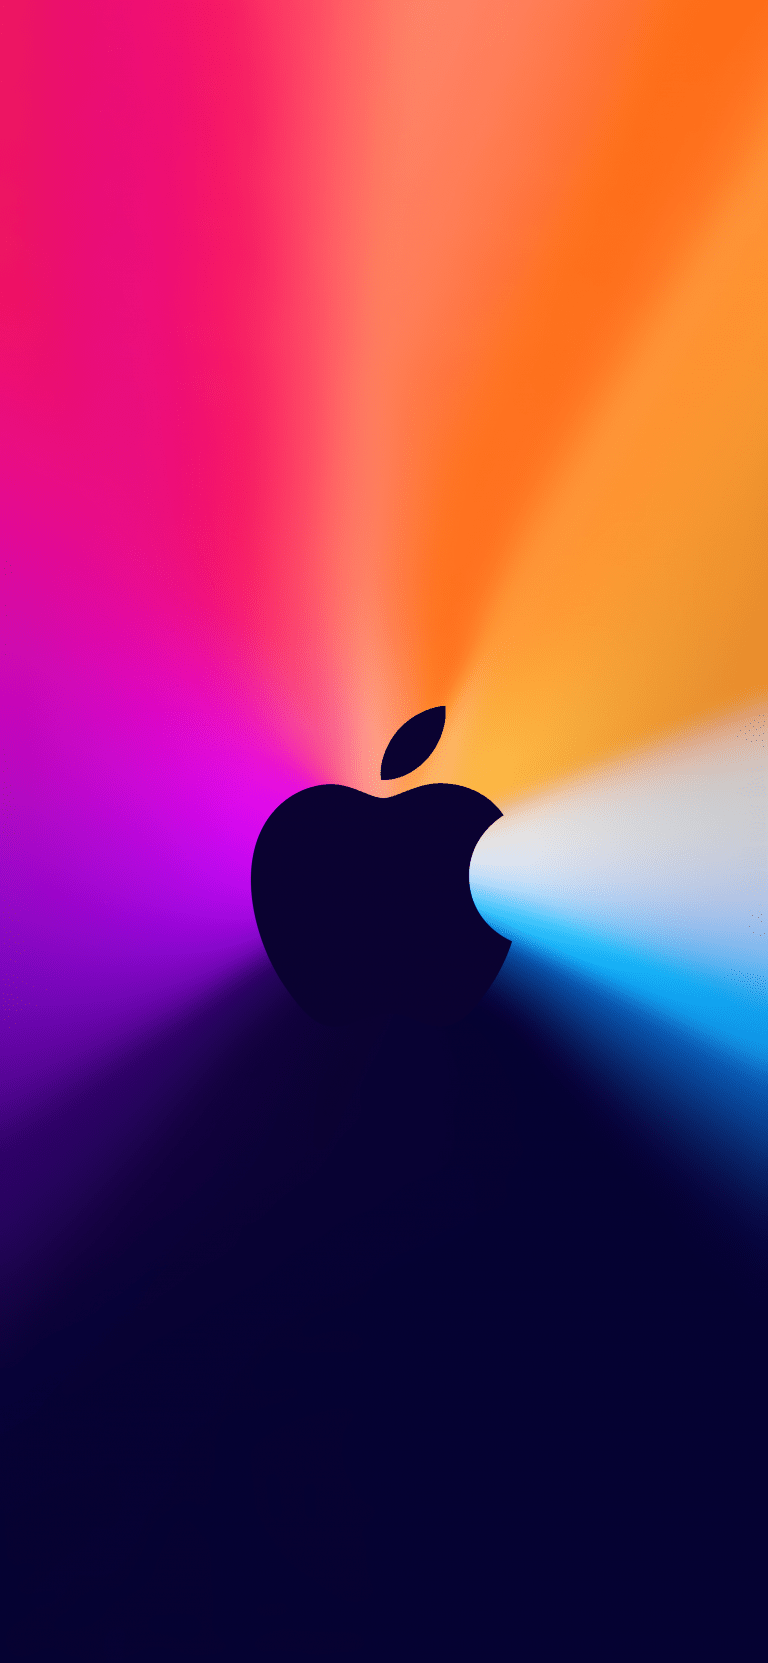 Apple Background - iXpap